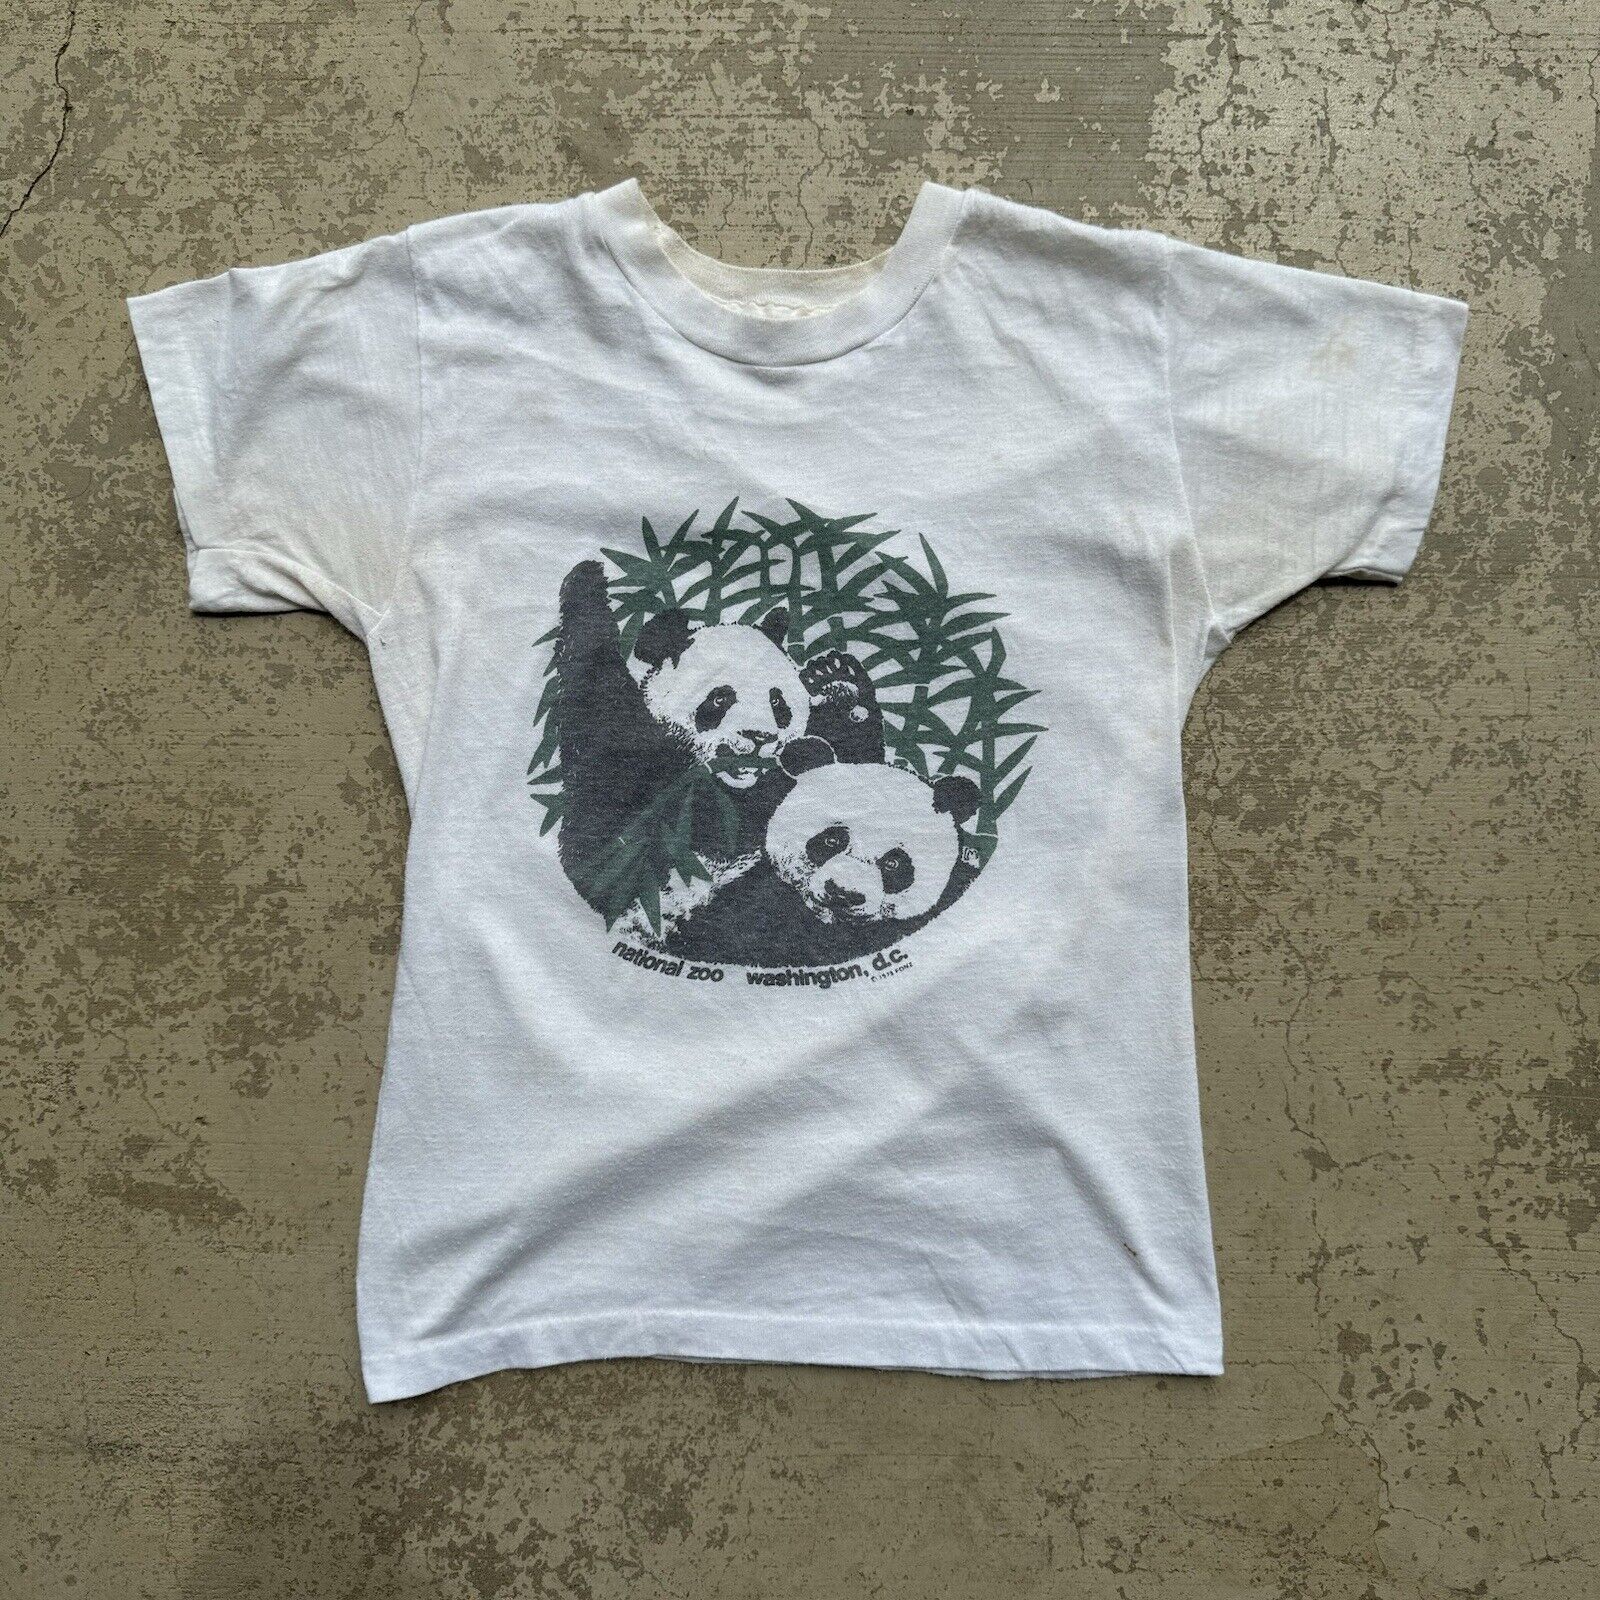 Vintage 1970s 79 Washington D.C. National Zoo Panda Bear Tee Shirt Size Small